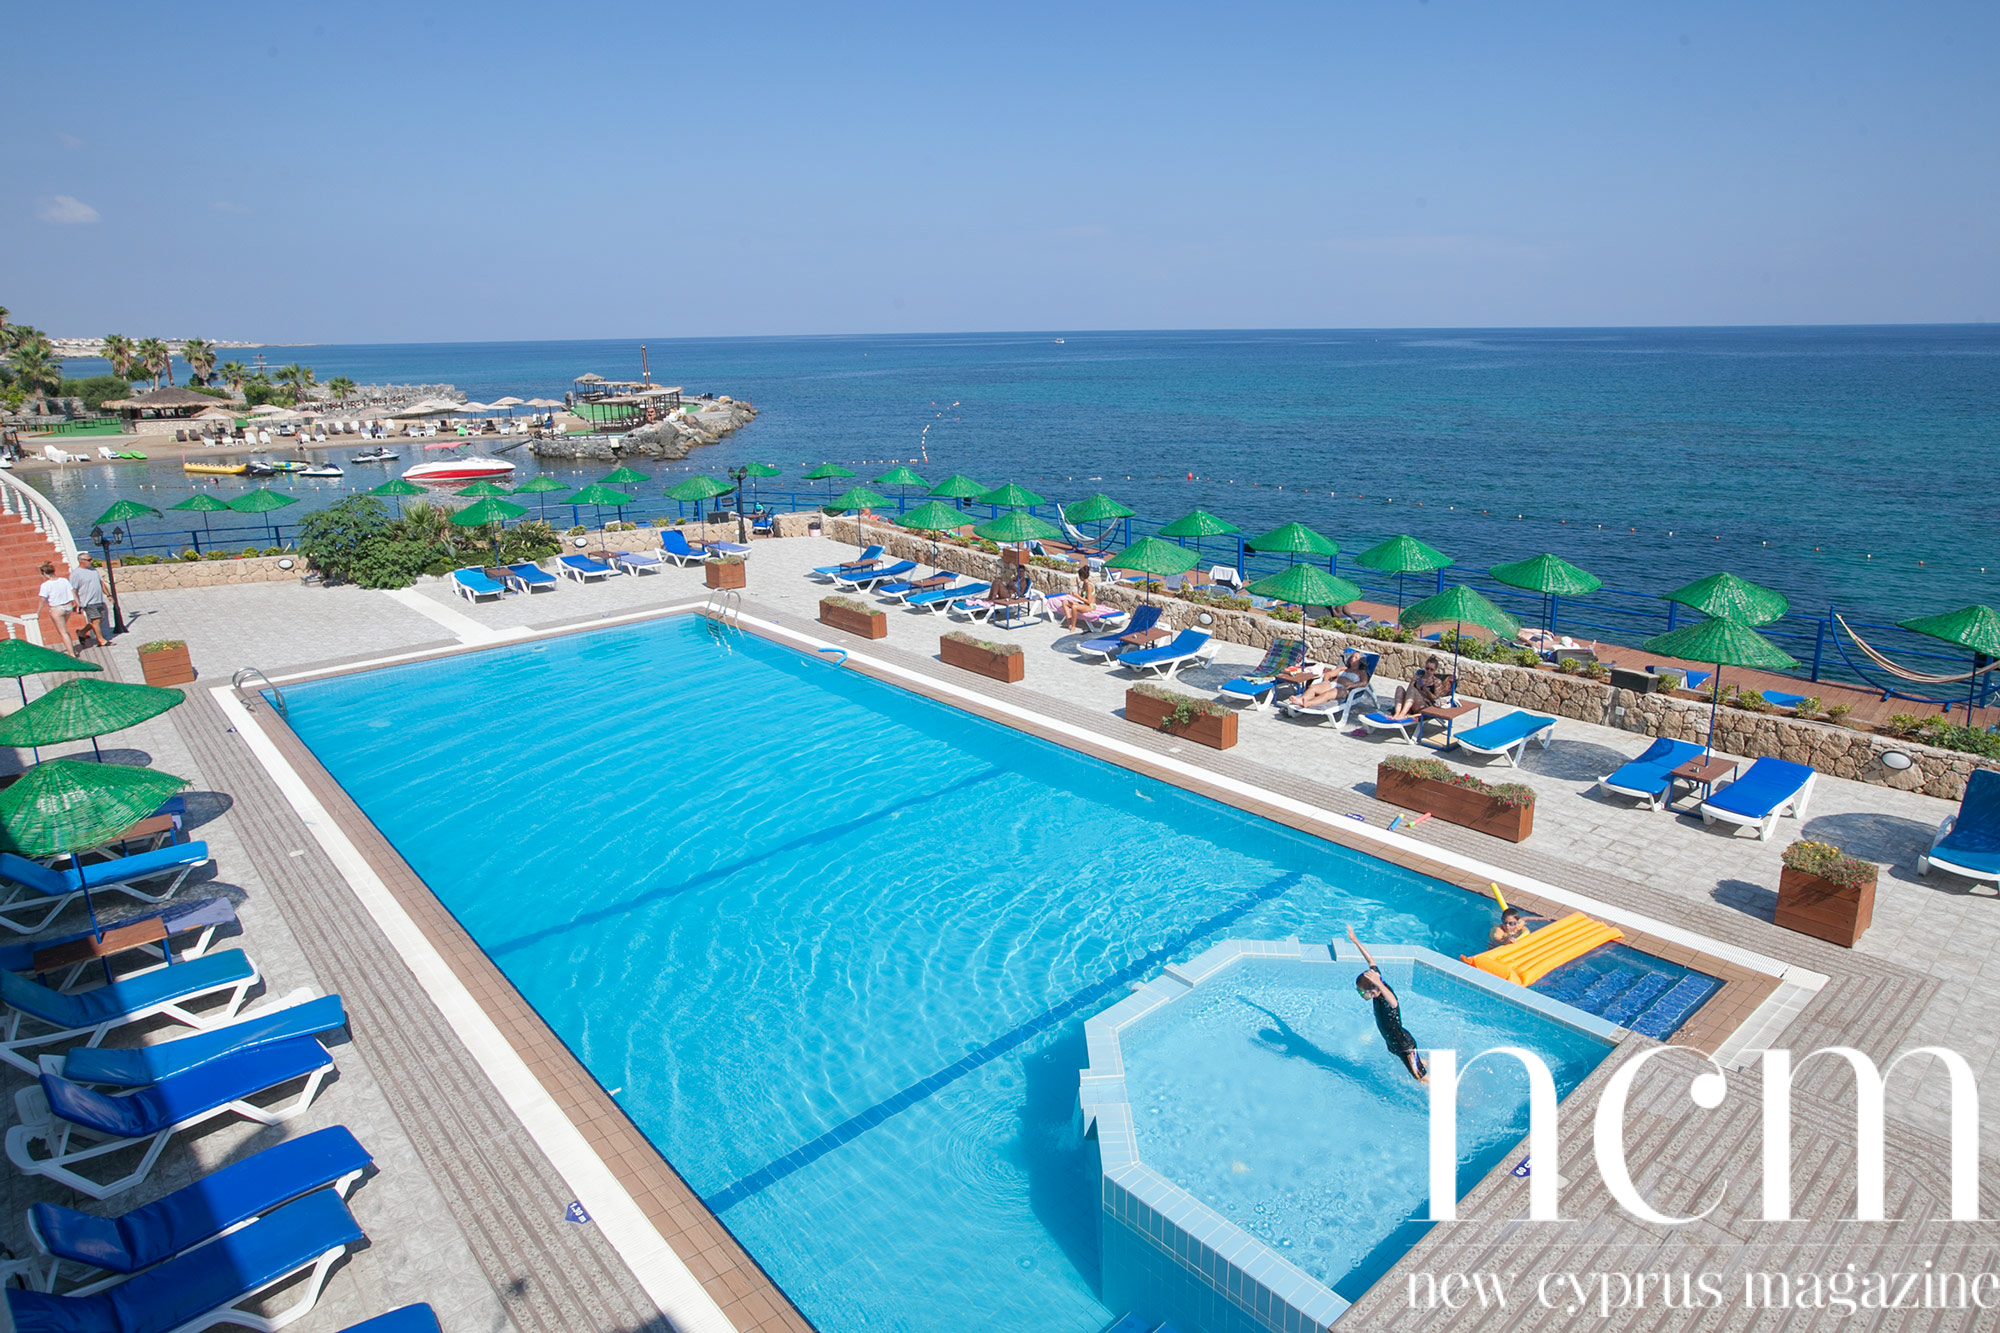 Enjoy the sun, bath and activities at Manolya Hotel - North Cyprus ...